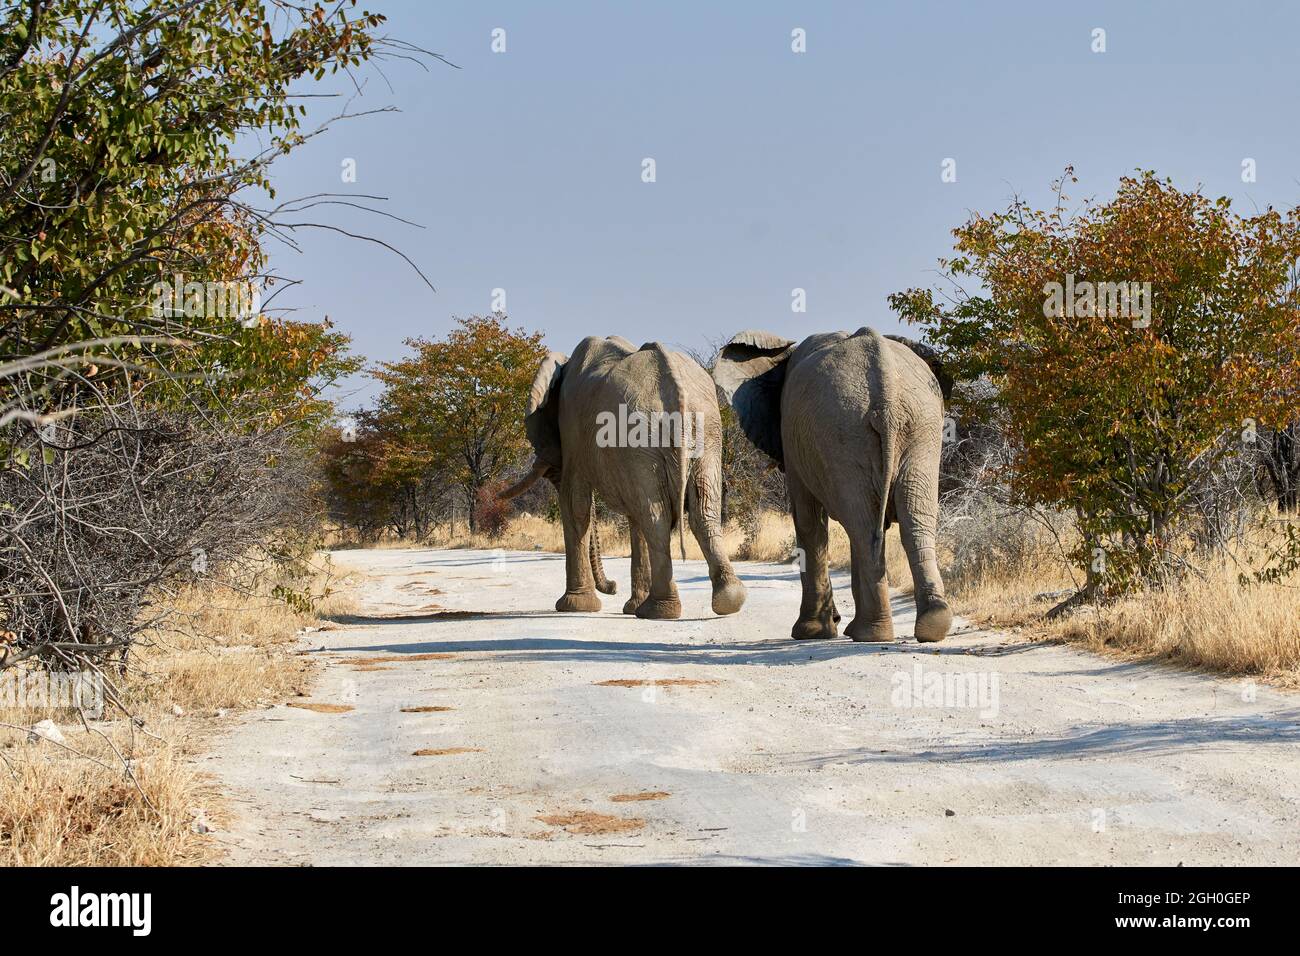 Dos elefantes africanos (Loxodonta africana) caminando por la carretera de grava de safari, Etosha, Namibia. Foto de stock